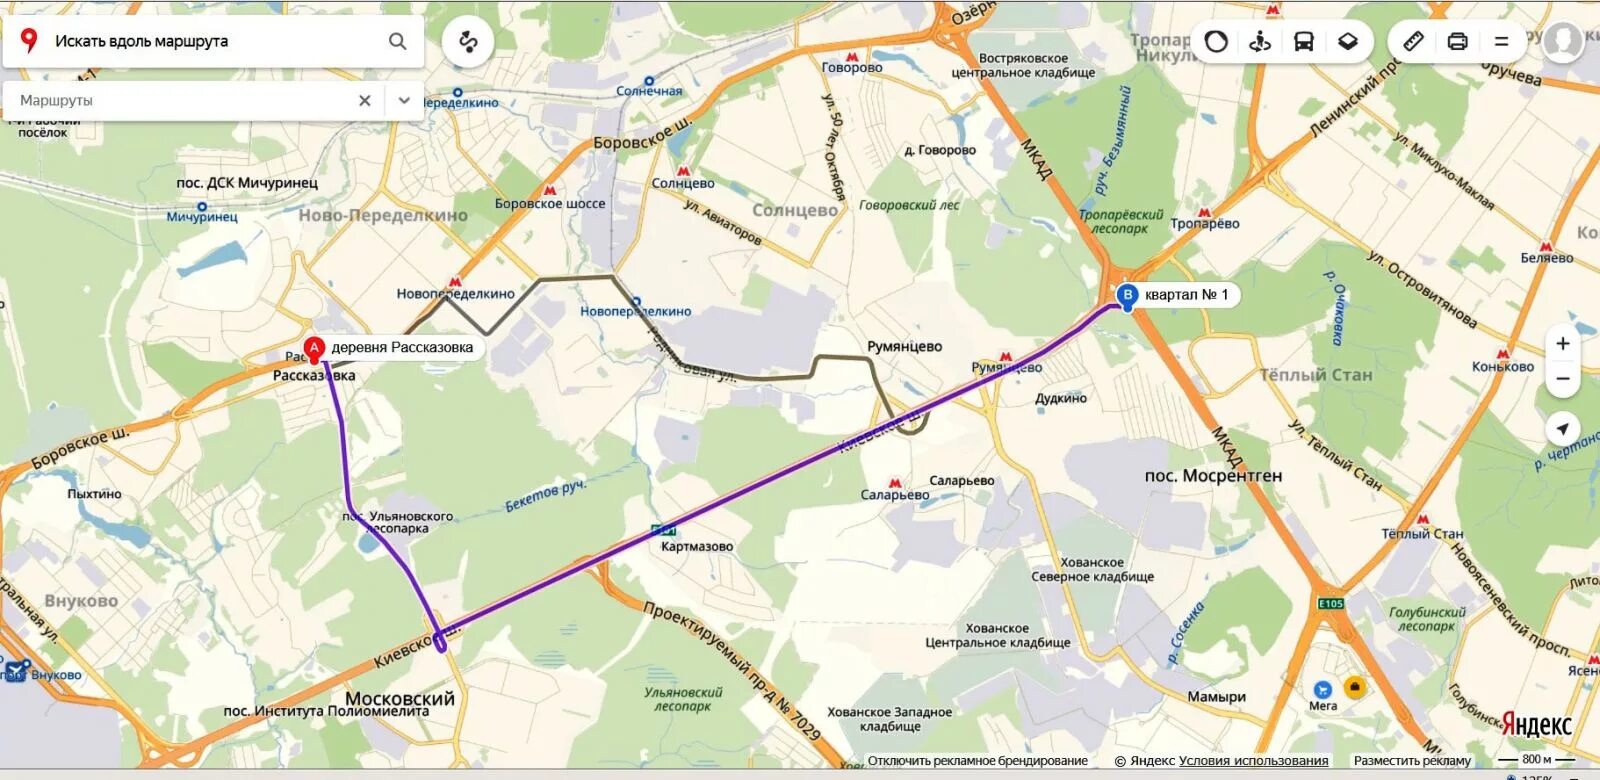 Хованское кладбище транспорт. Хованское кладбище на карте. Станция Новопеределкино. Хованское кладбище метро Саларьево. Саларьево на карте.